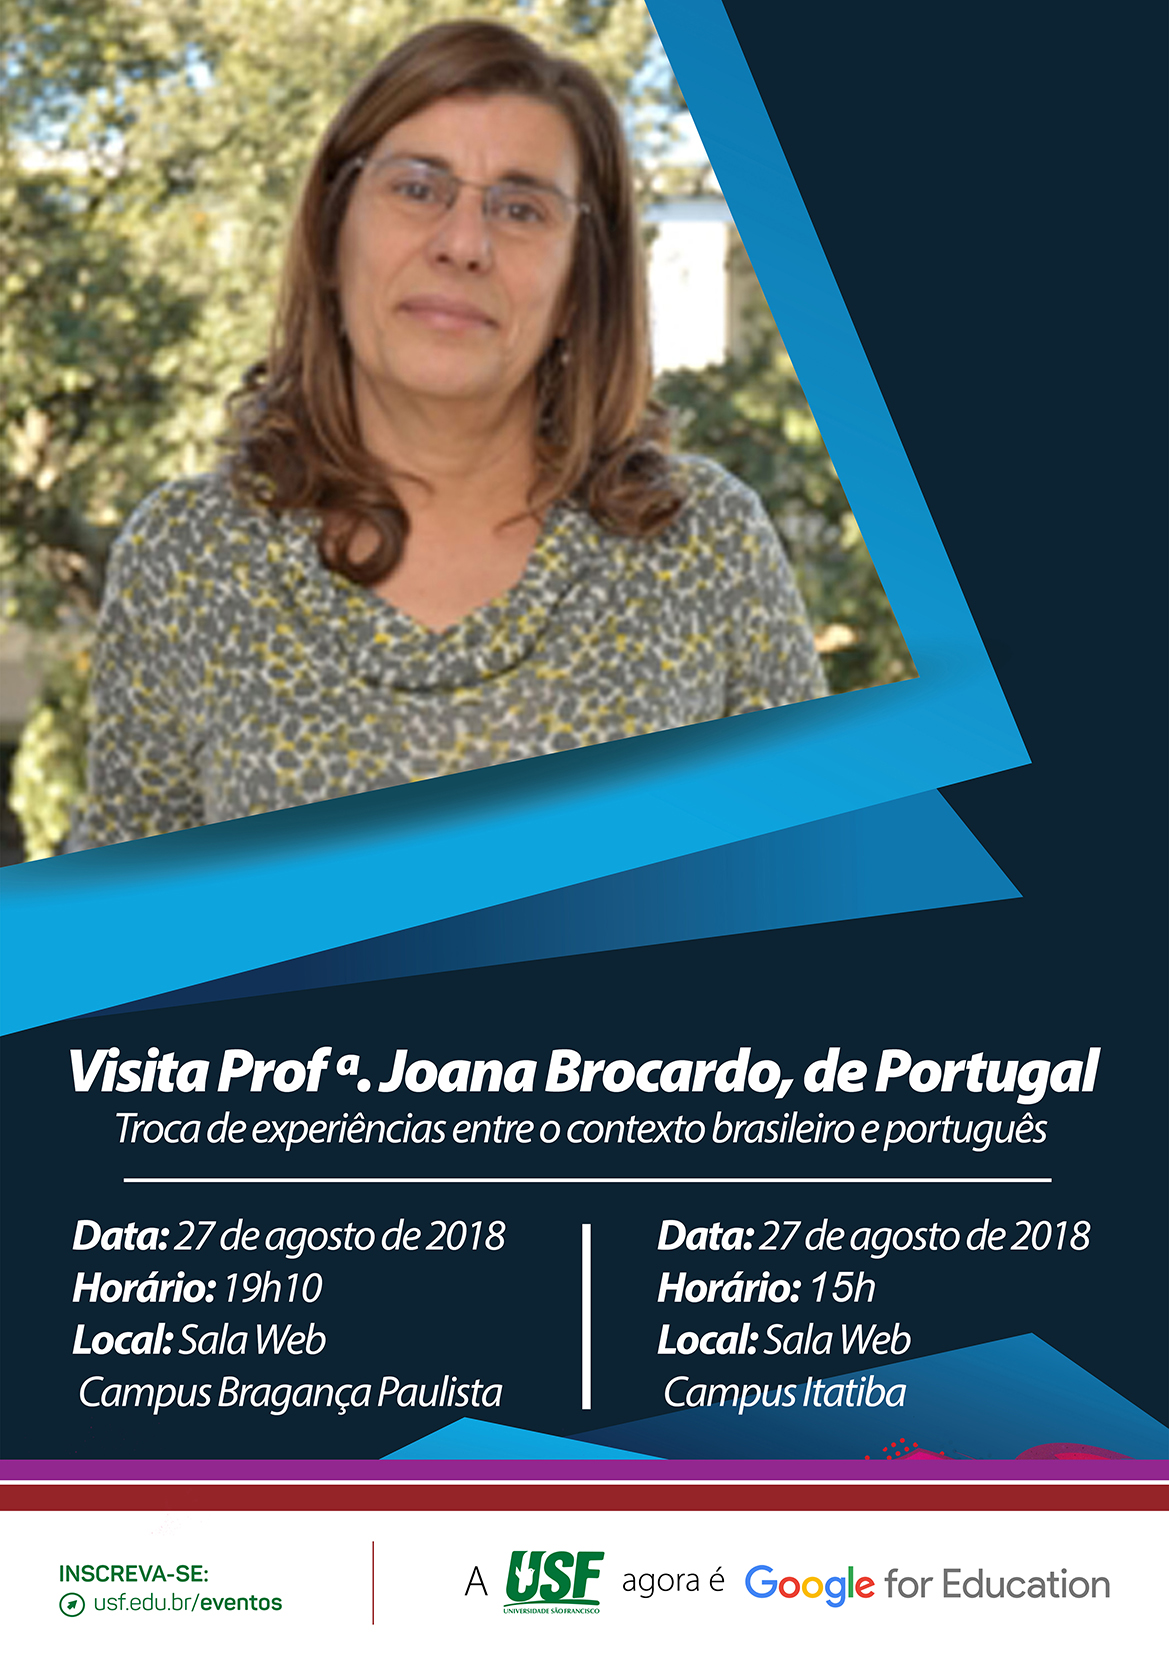 Visita Professora Joana Brocardo, de Portugal na USF